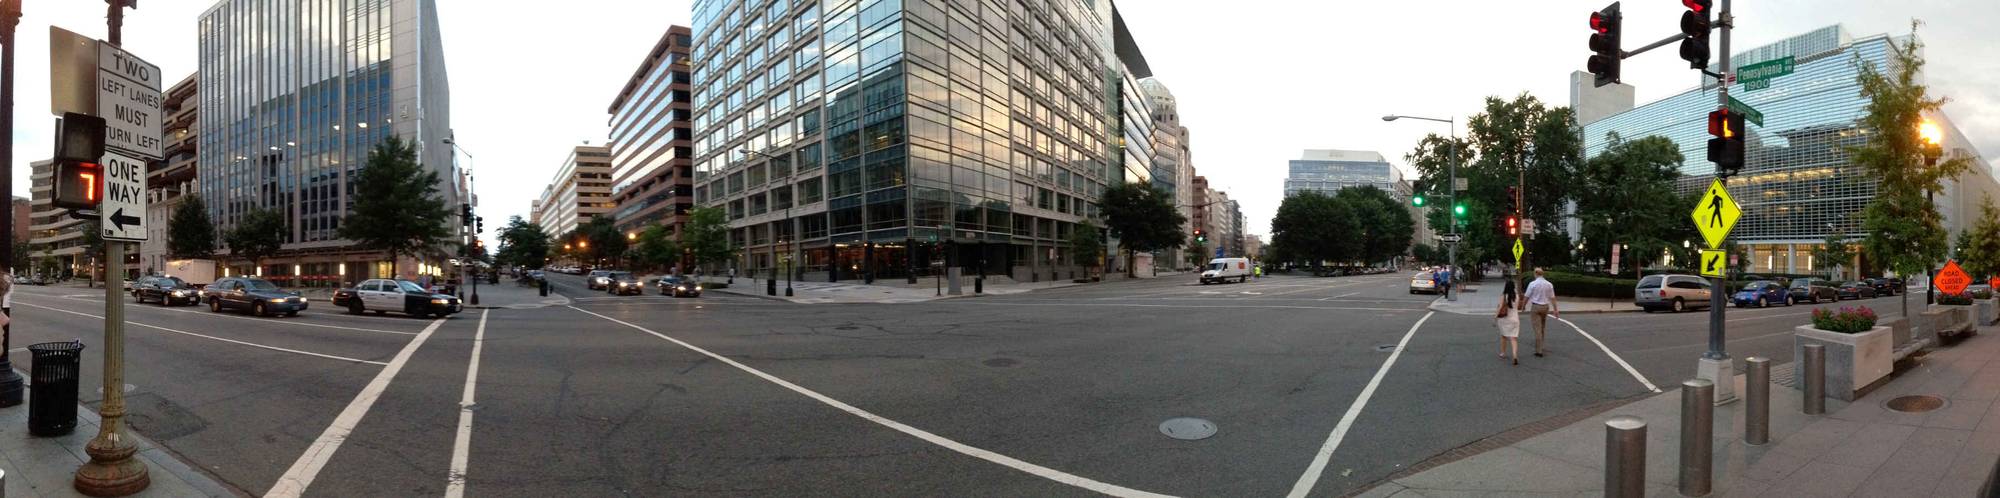 Panorama of city street in Washington